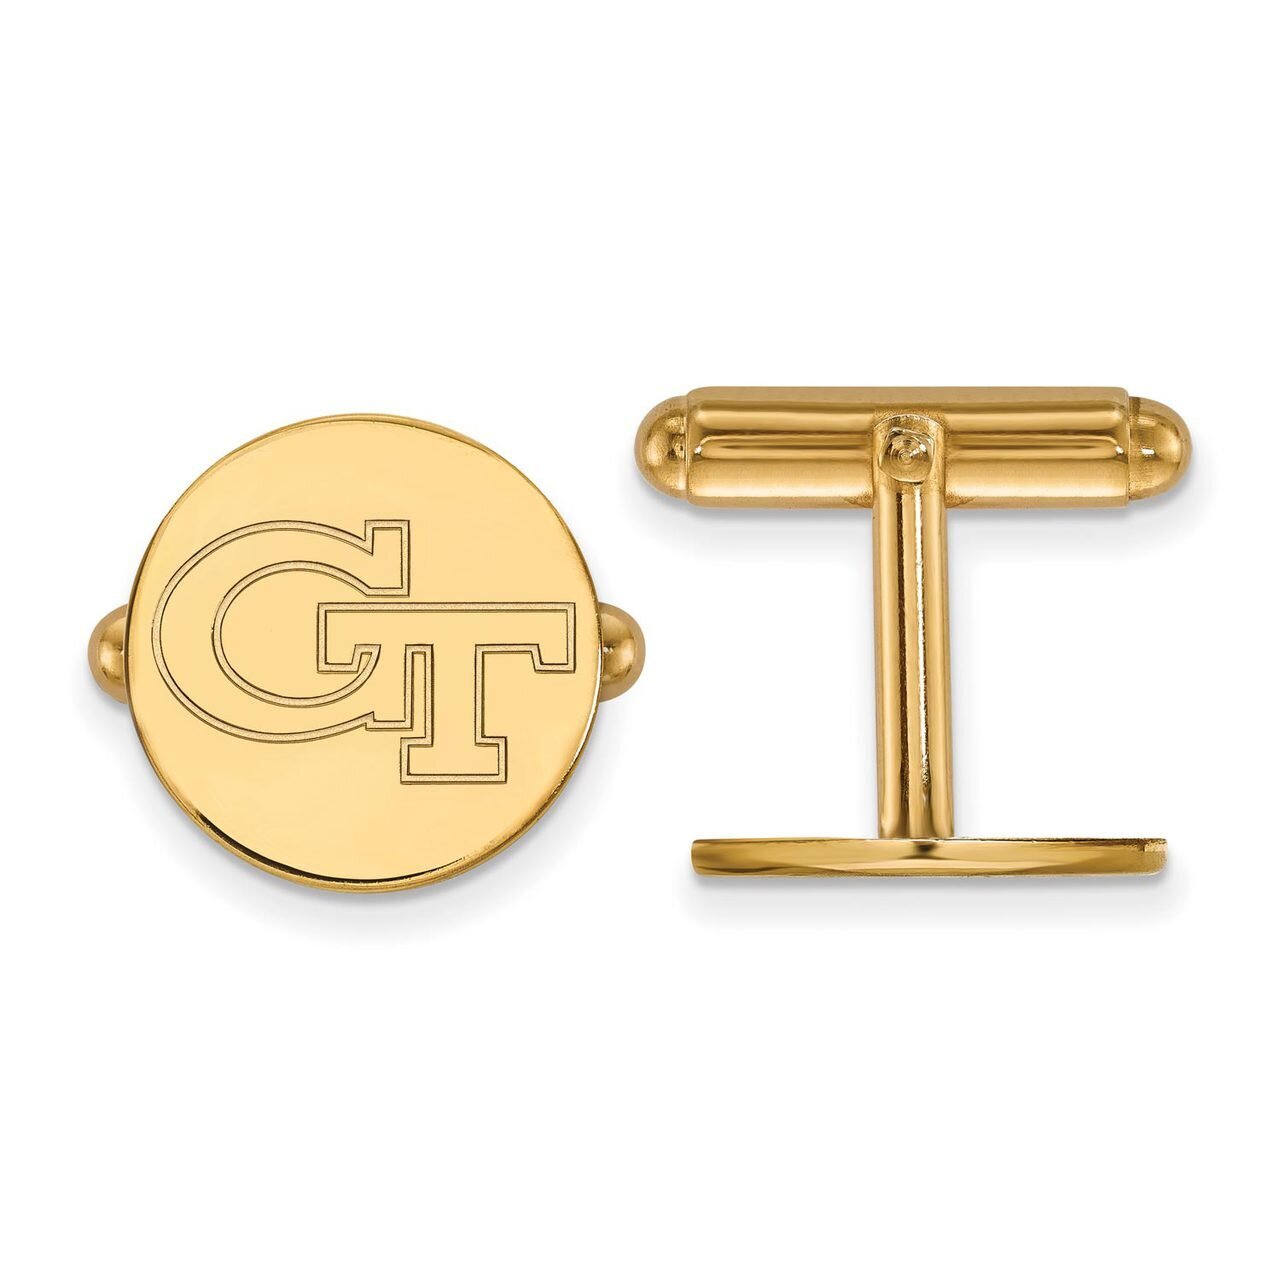 Georgia Institute of Technology Cufflinkss Gold-plated Silver GP064GT